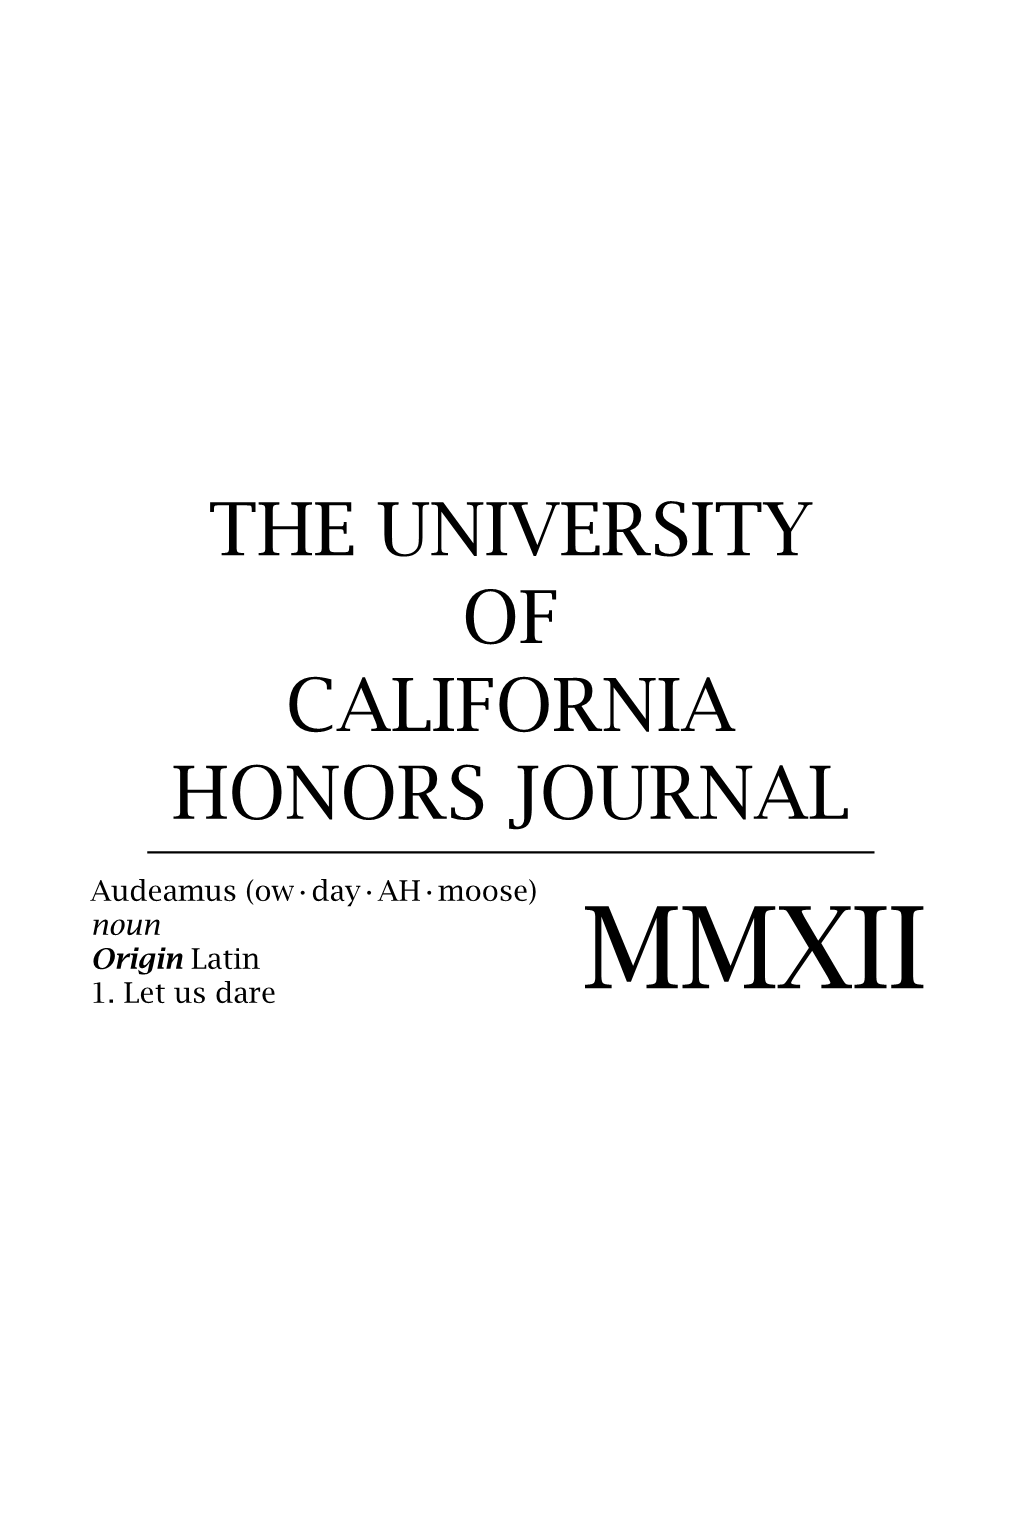 The University of California Honors Journal